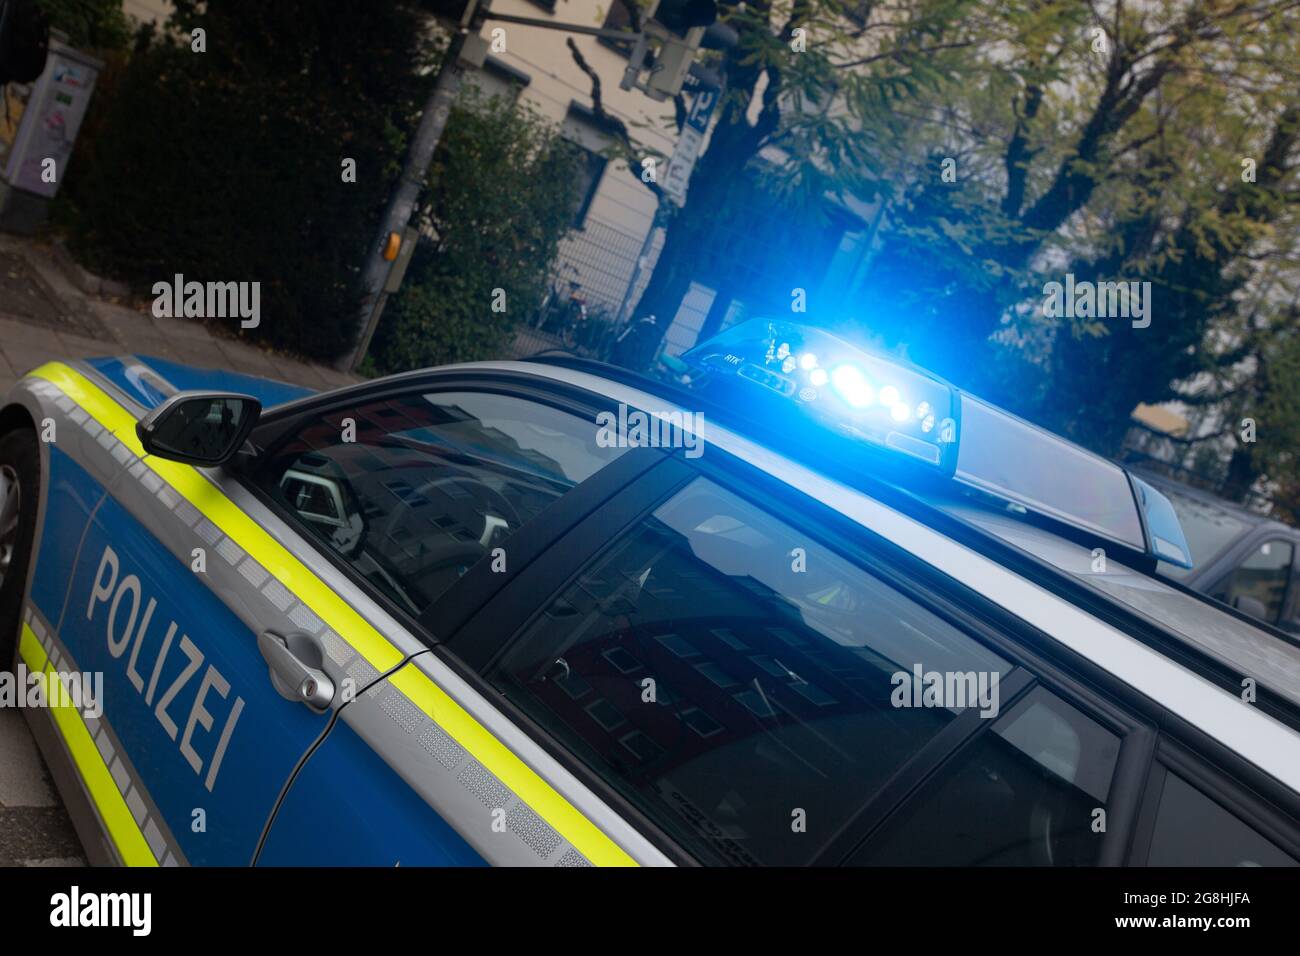 Polizeiwagen im Einsatz mit Blaulicht. (Photo by Alexander Pohl/Sipa USA) Credit: Sipa USA/Alamy Live News Stock Photo